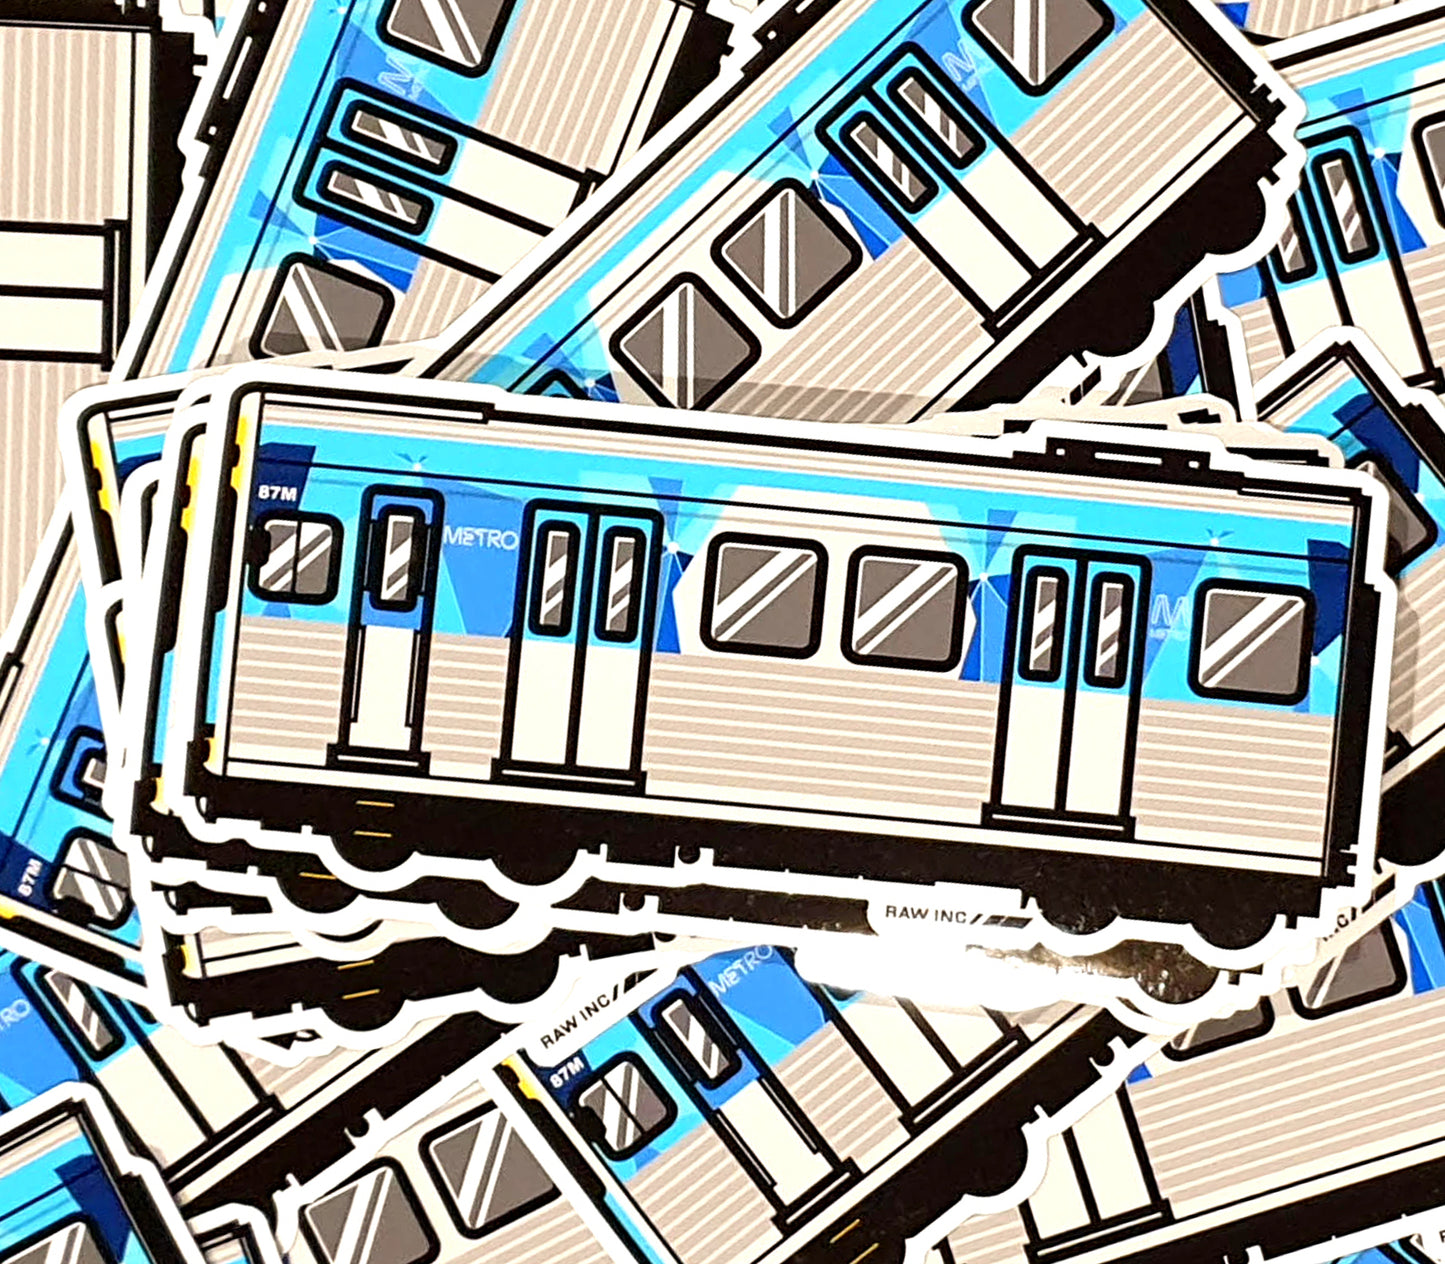 Raw Inc / Australian VIC Comeng Metro train sticker